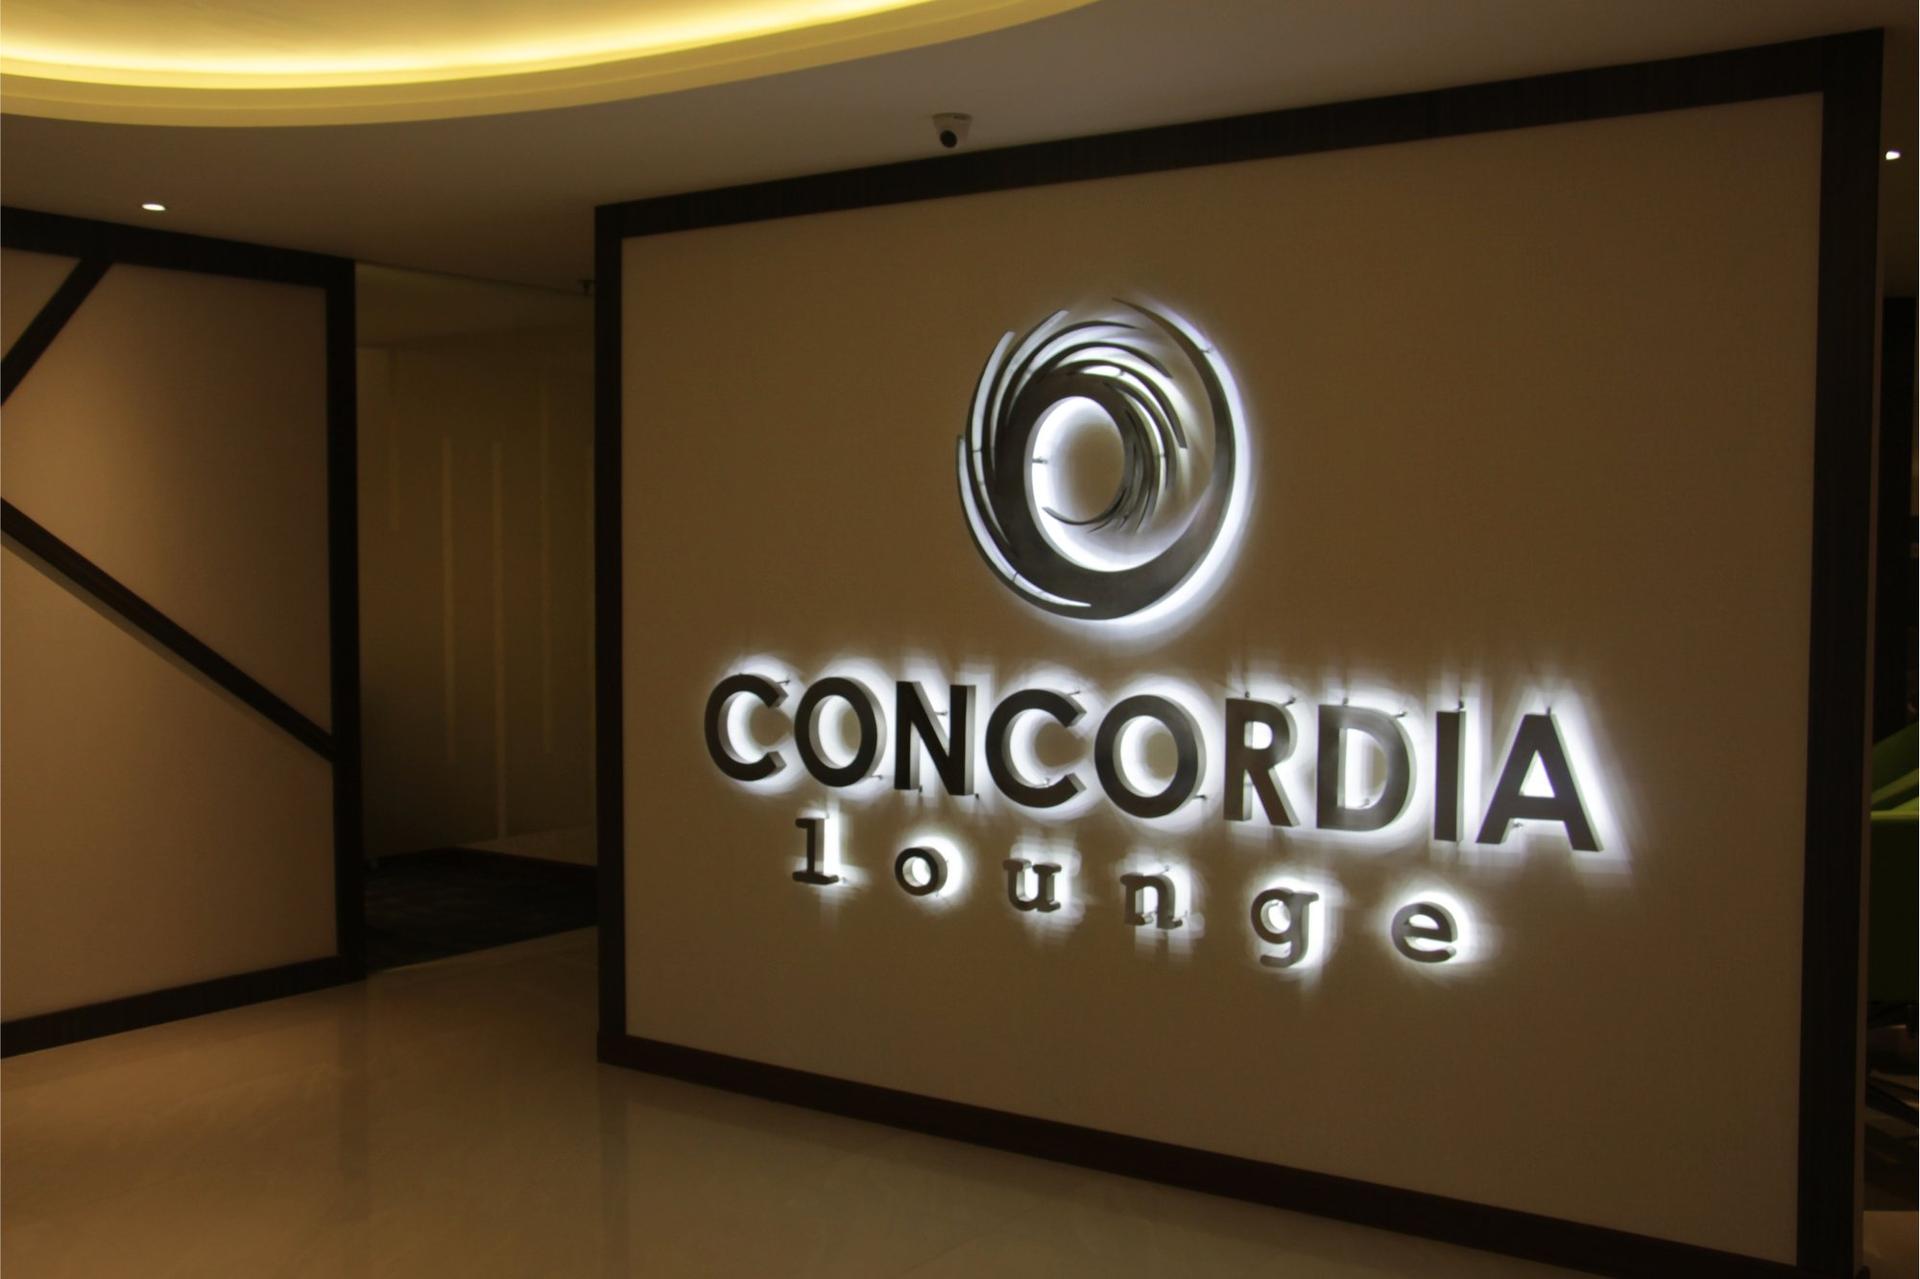 Concordia Lounge image 10 of 23